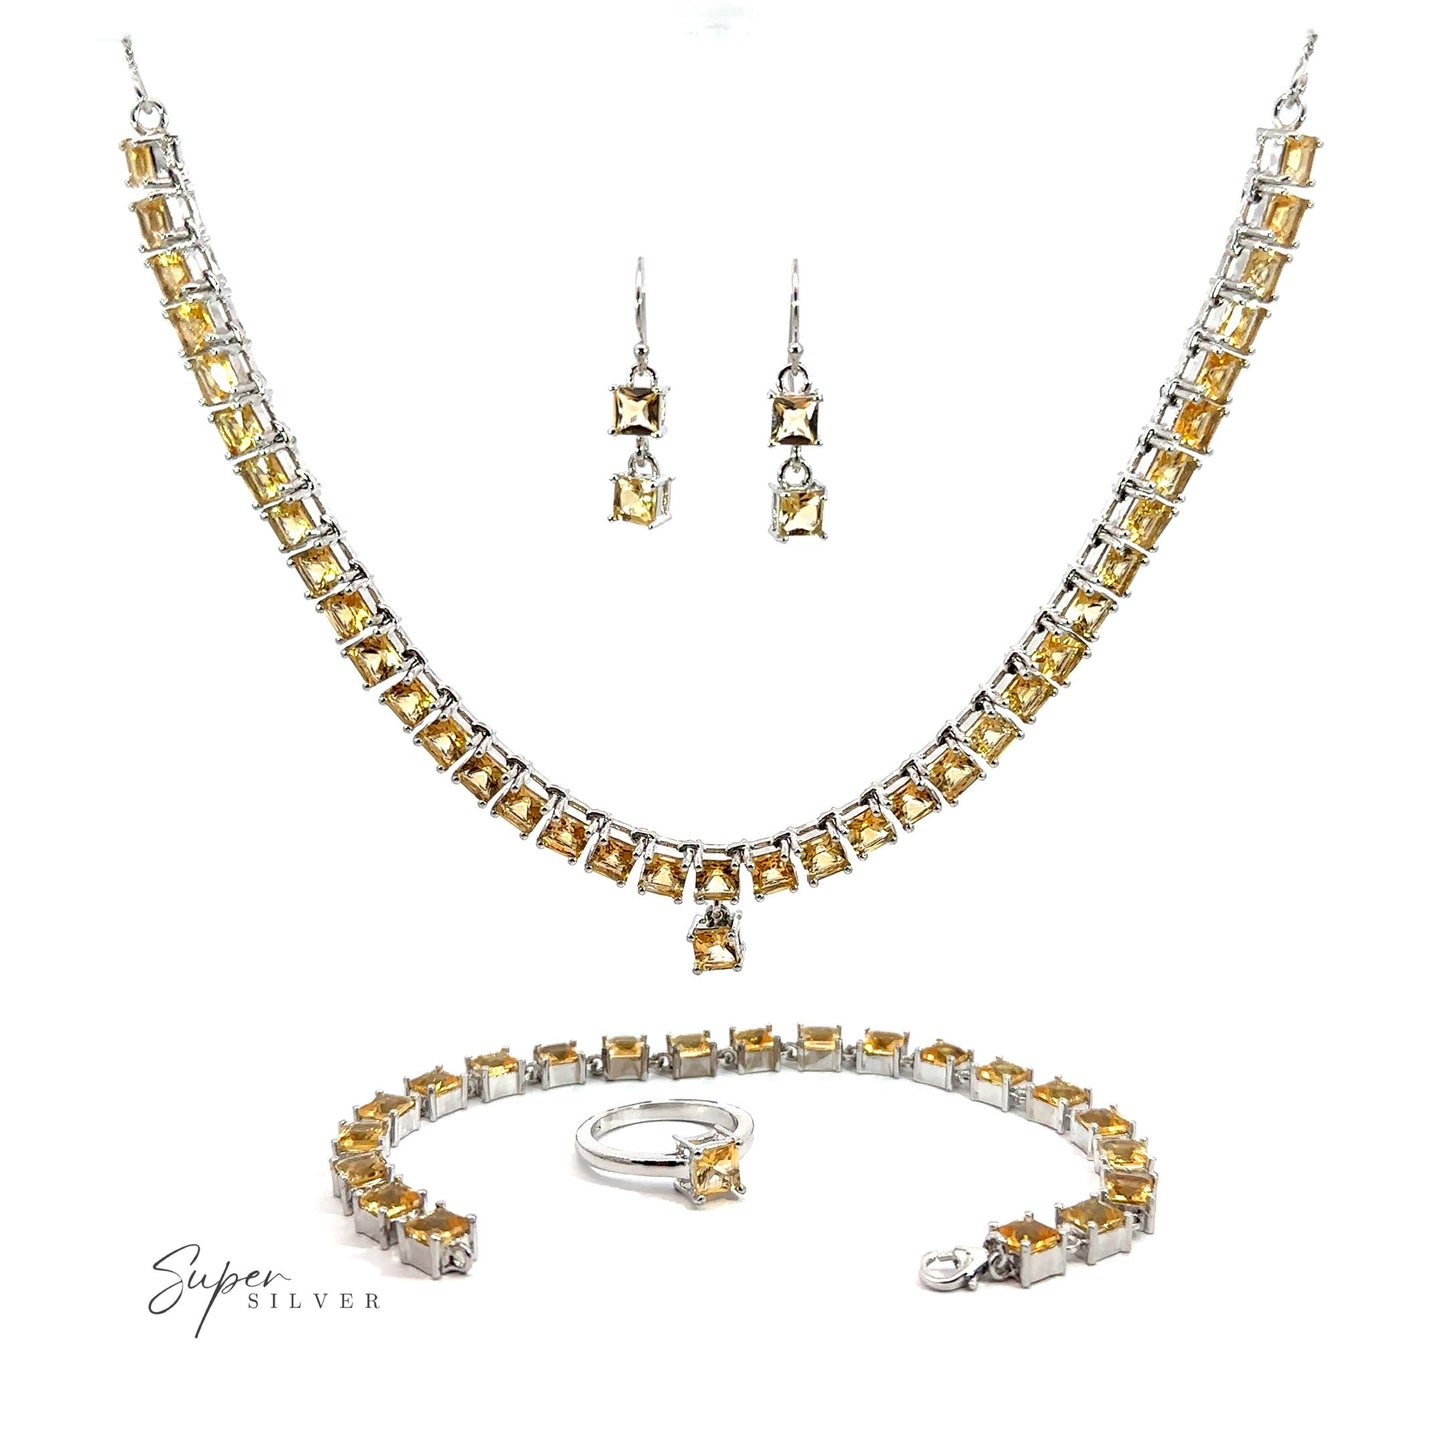 An Elegant Faceted Gemstone Jewelry Set featuring citrine gemstones.